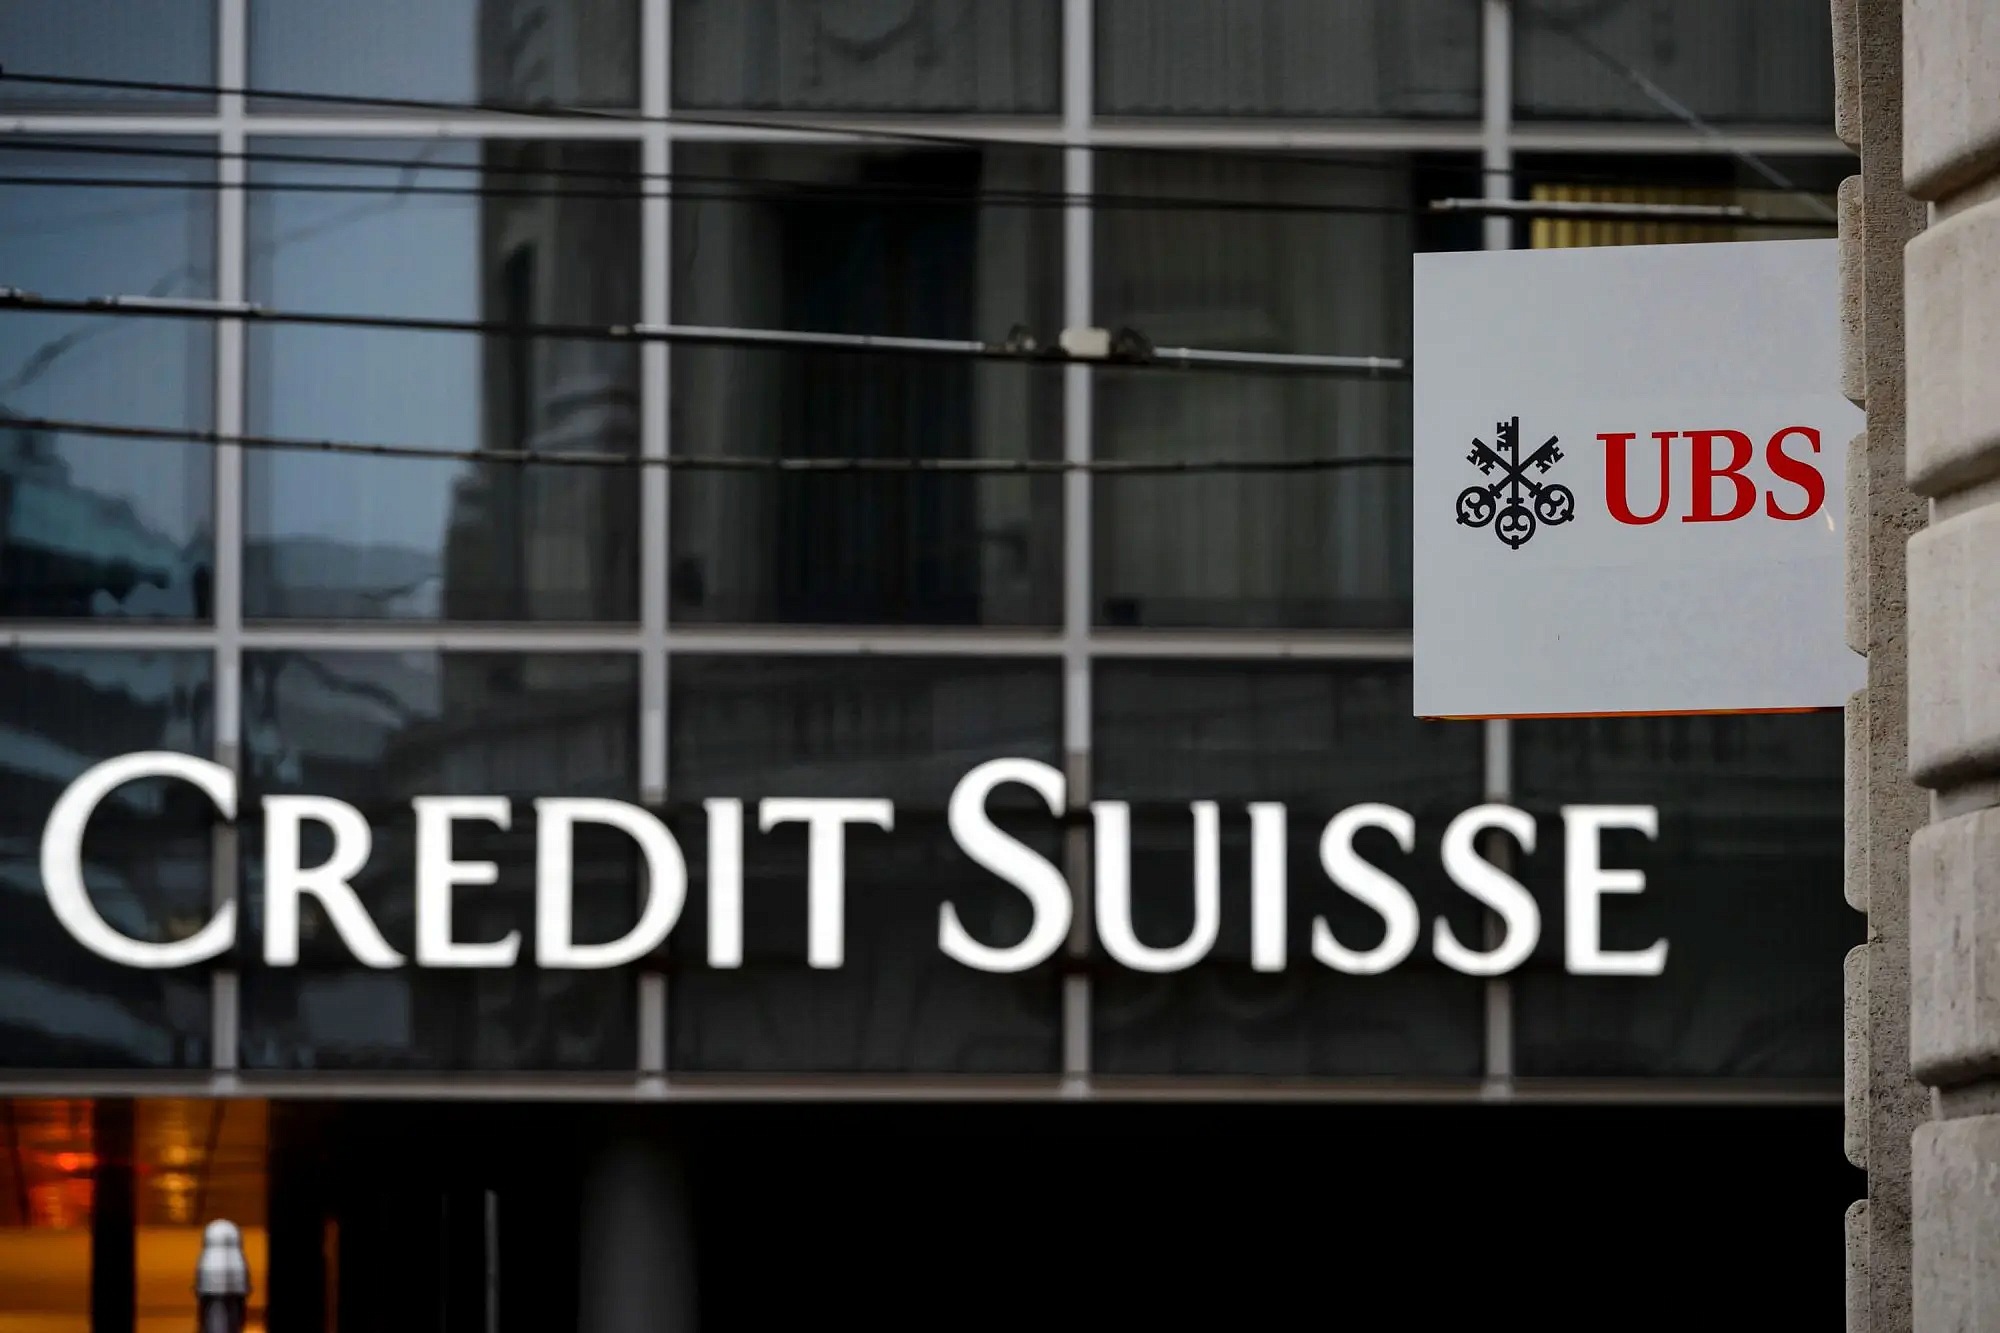  Credit Suisse   UBS